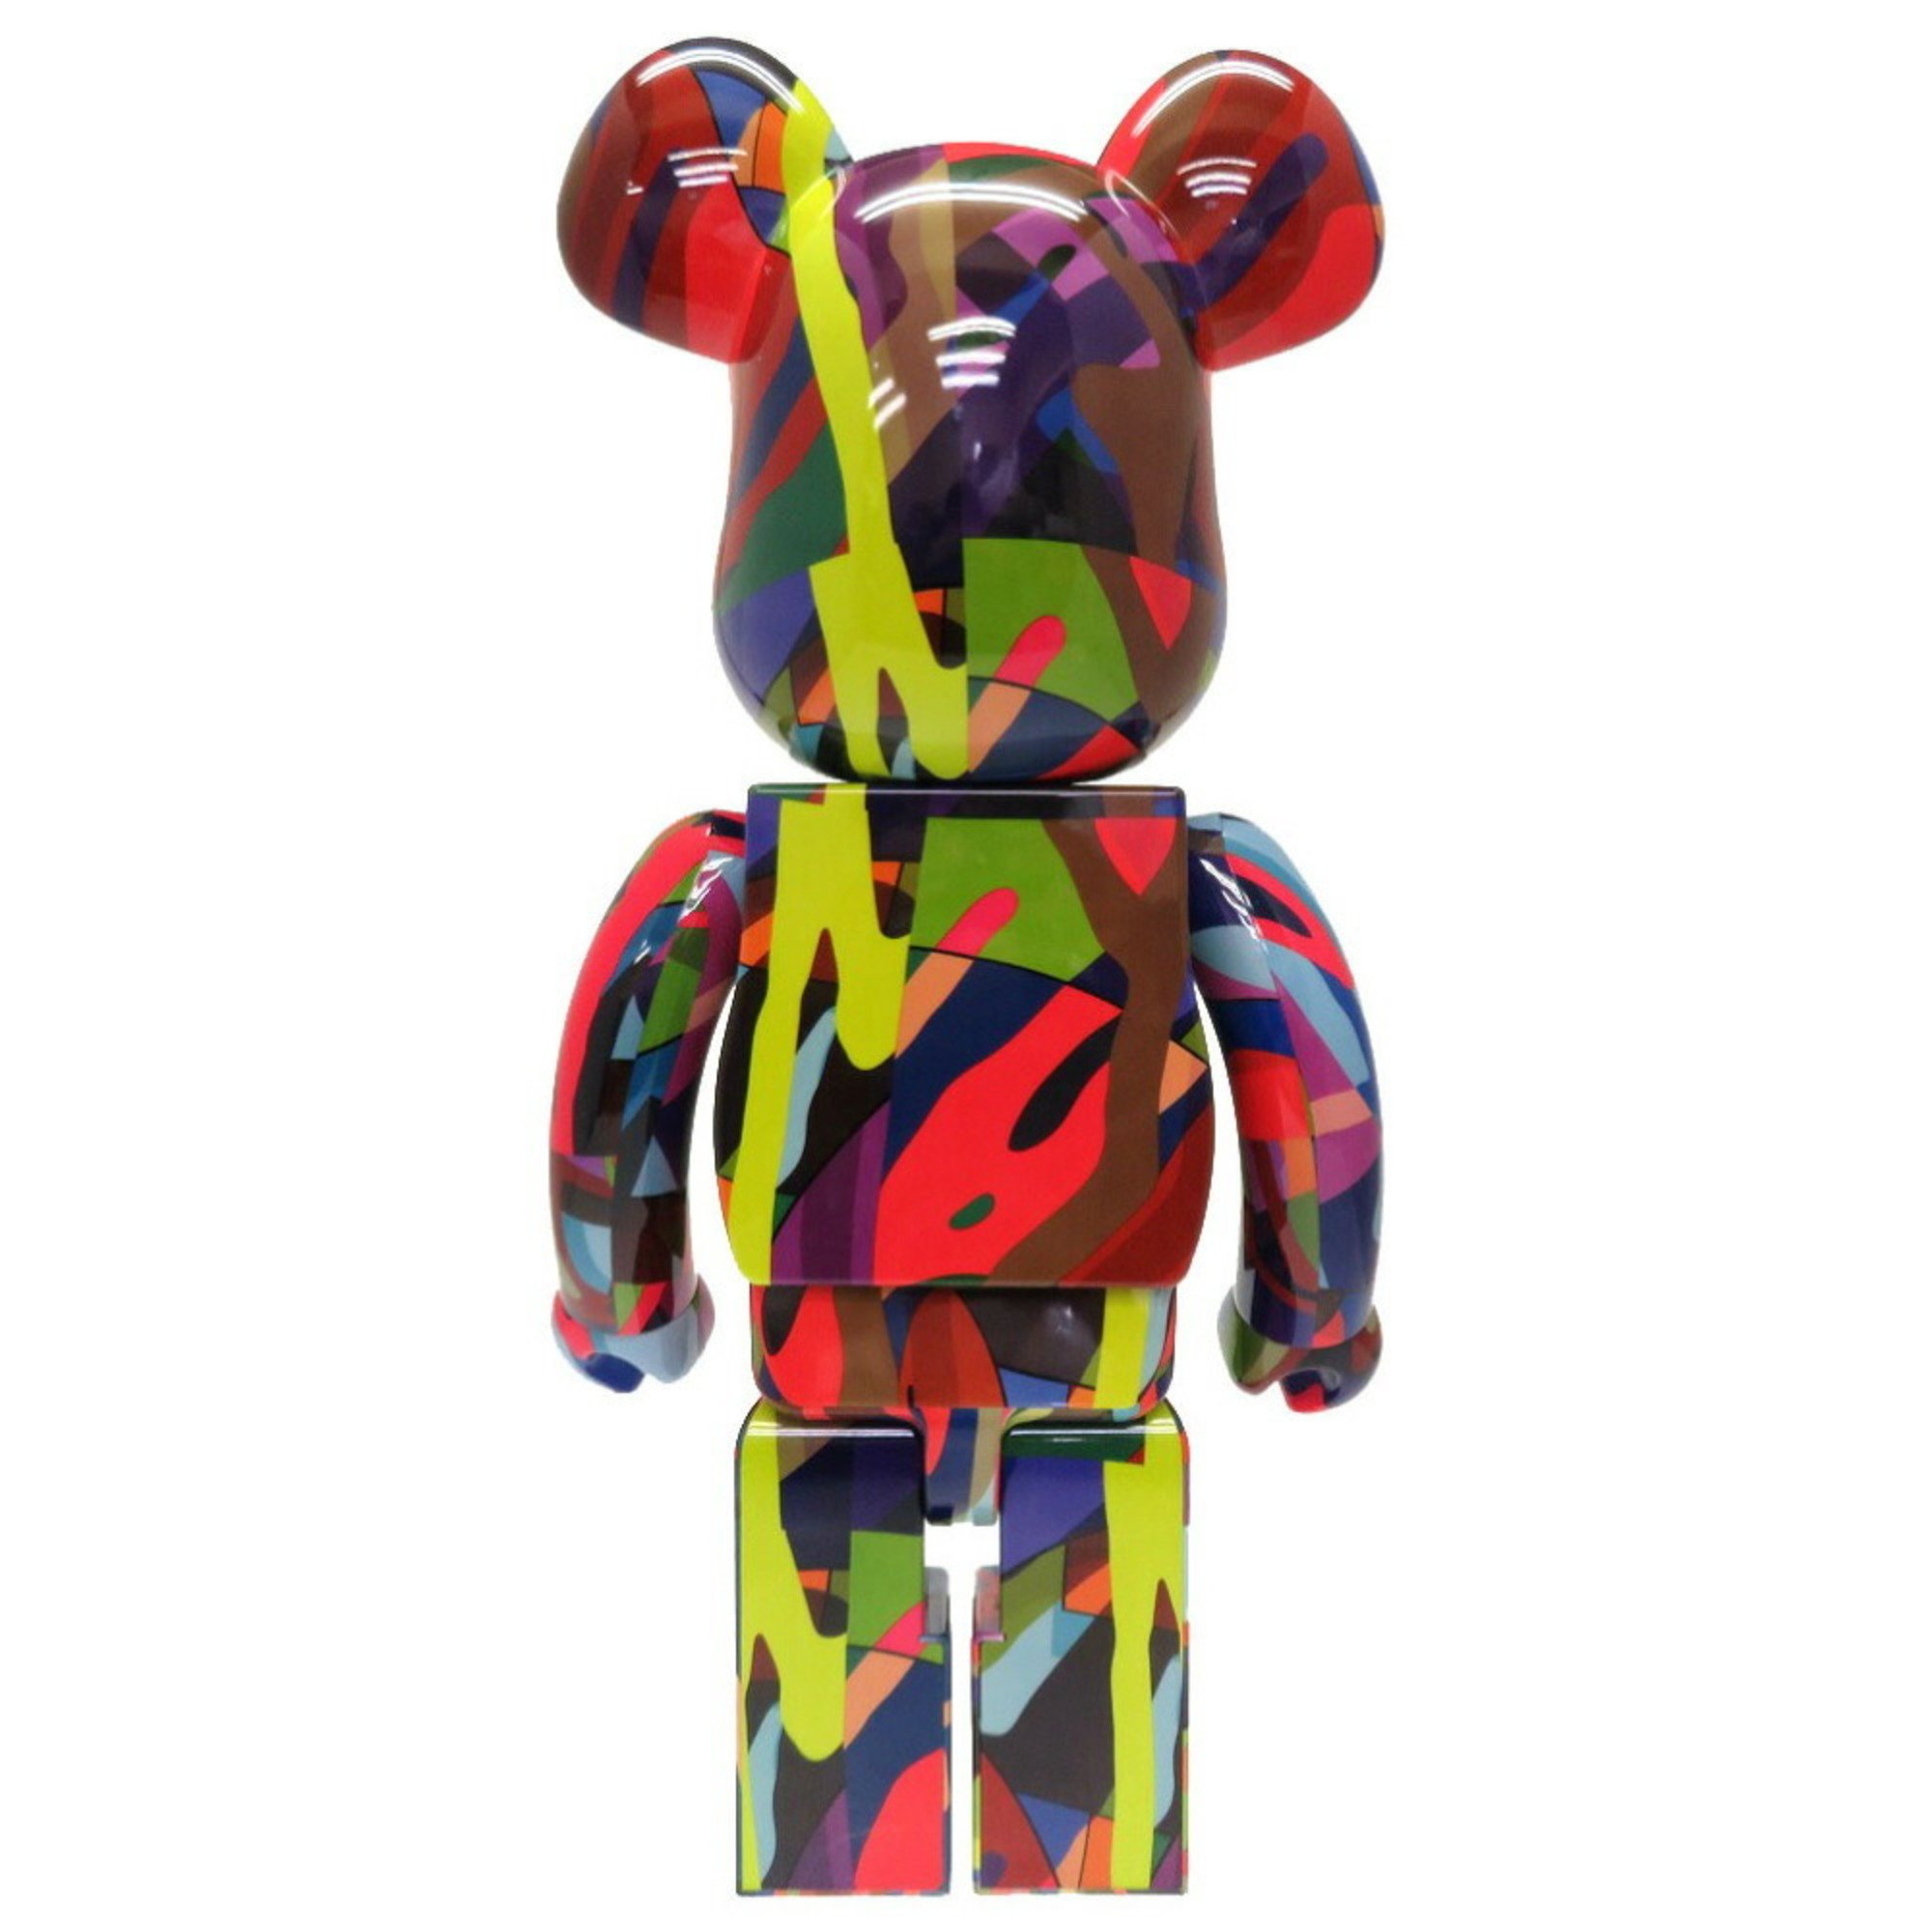 Medicom Toy Bearbrick Cowes Tension 1000% Plastic Multicolor Doll Figure Bear 0033 MEDICOM TOY BE @ RBRIC KAWS TENSION